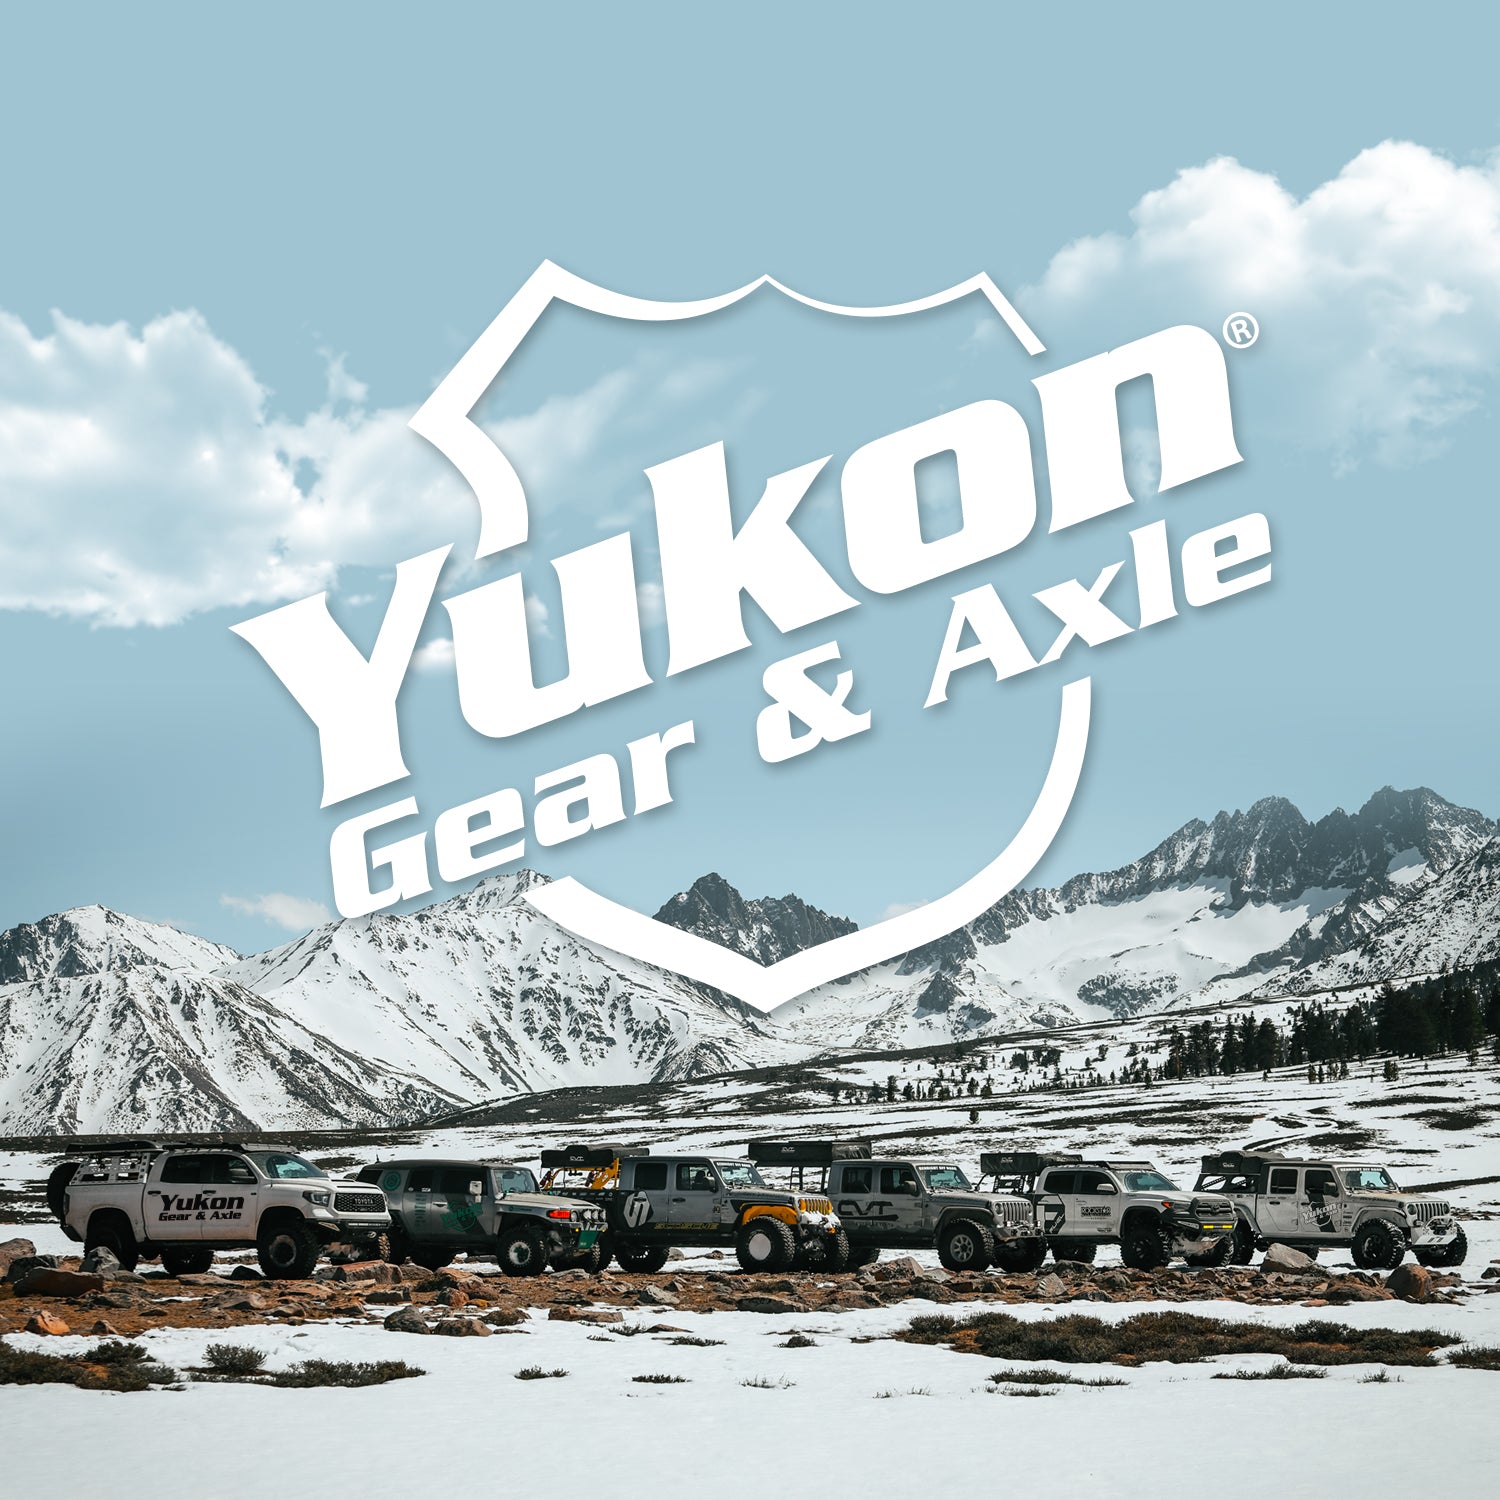 Yukon Gear Drive Axle Shaft Stud YSPSTUD-014